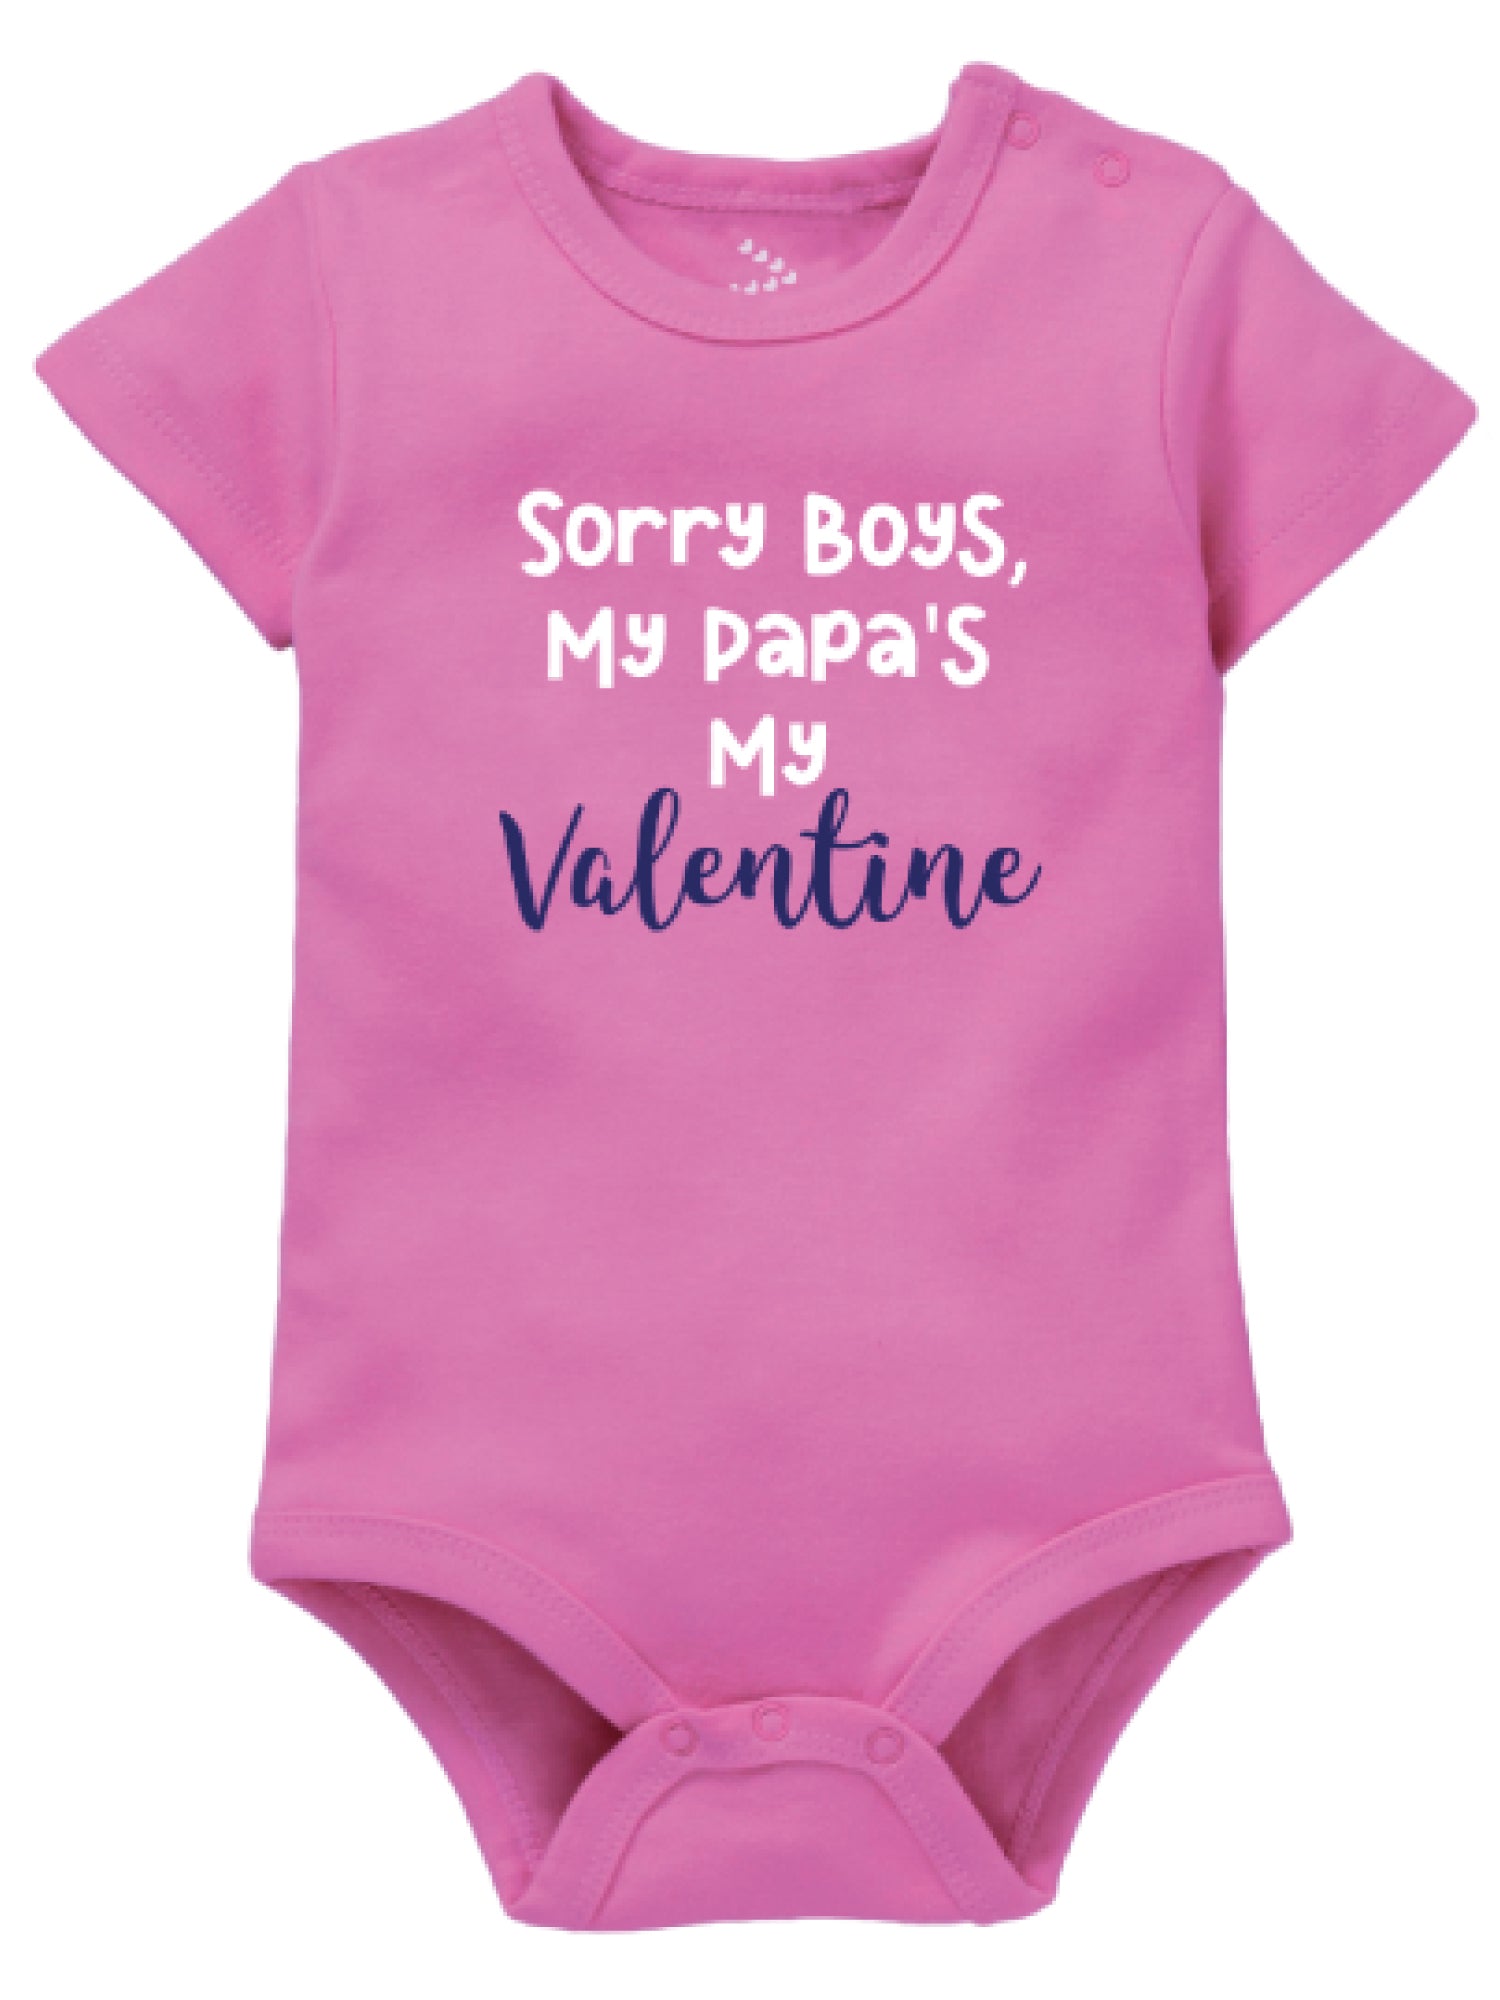 Sorry boys my Papa's my Valentine - Onesie